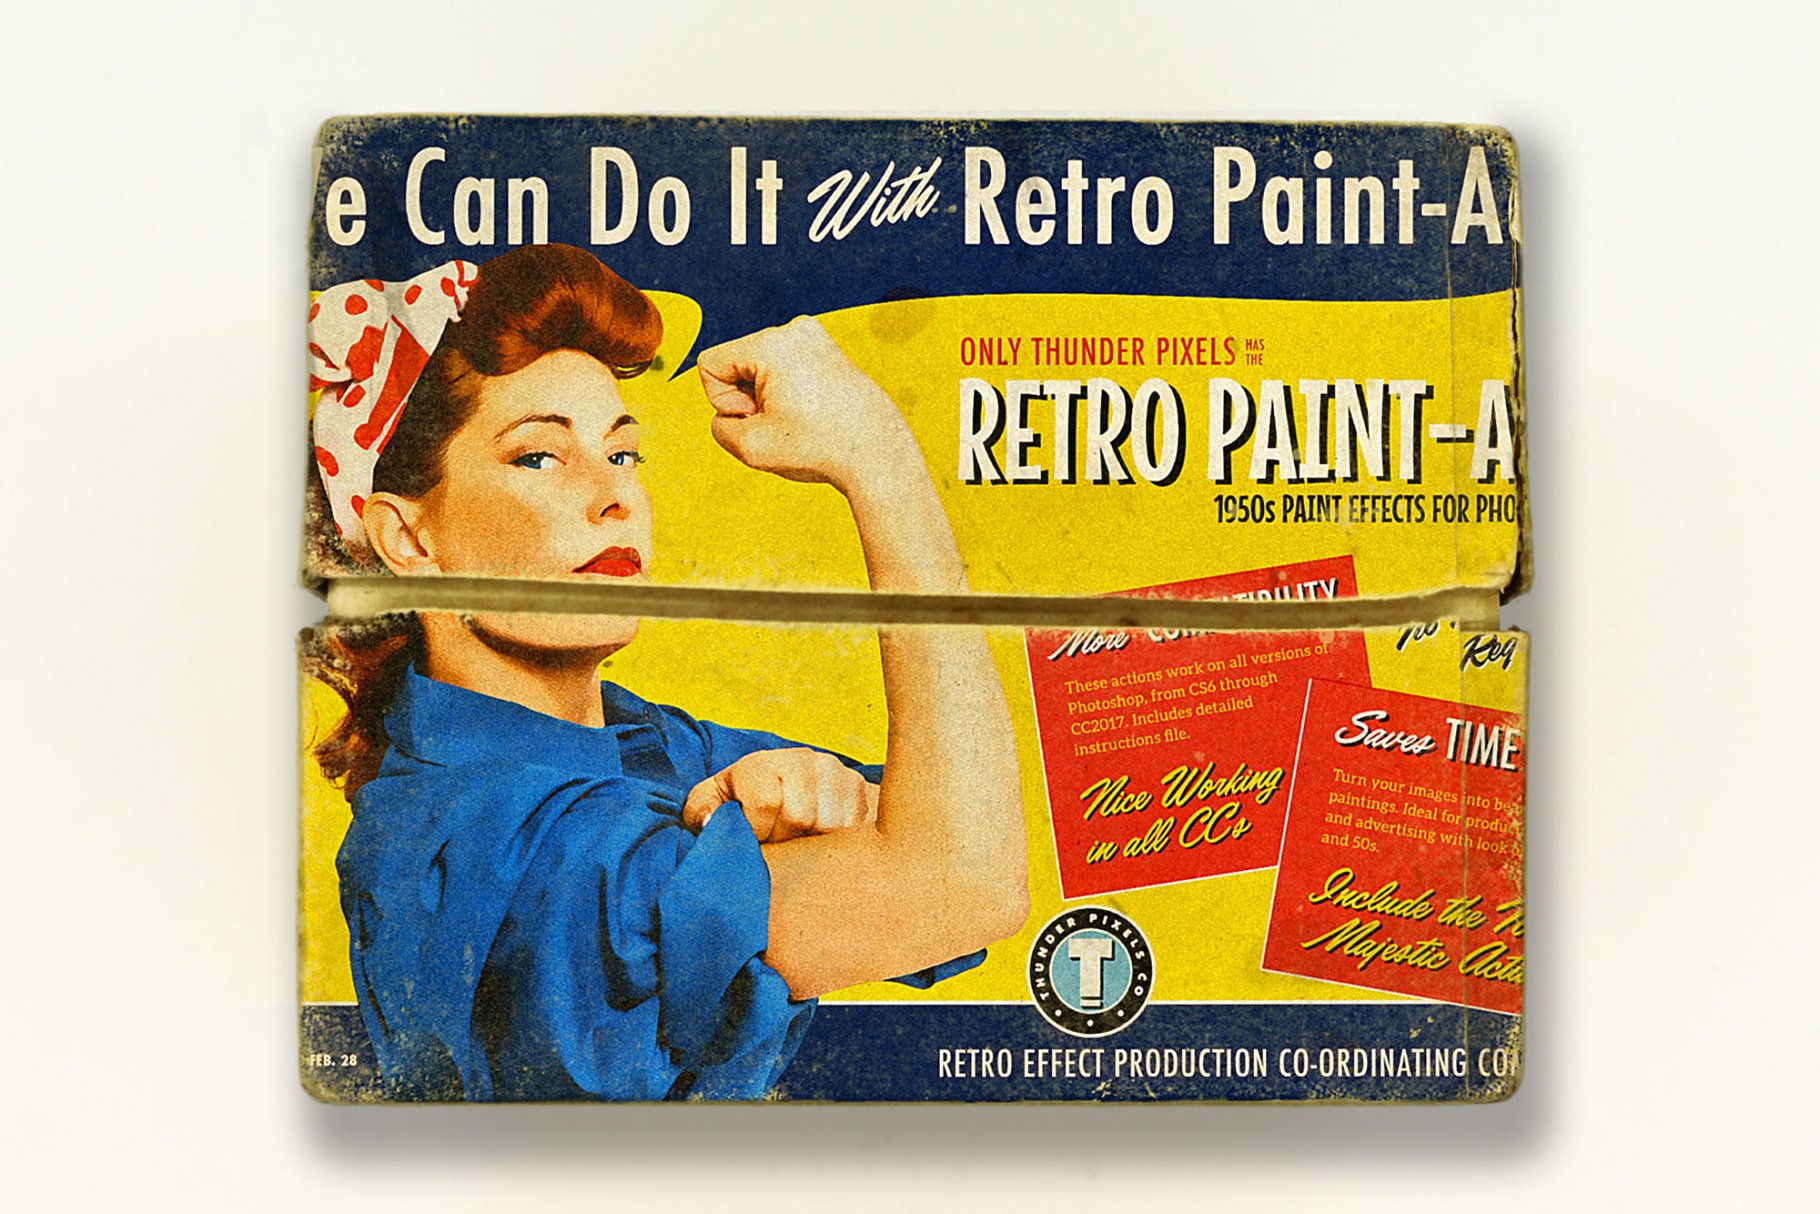 复刻旧时代杂志和电影海报印刷效果PS动作 Retro Paint-Act – PS Action + Kit插图(8)